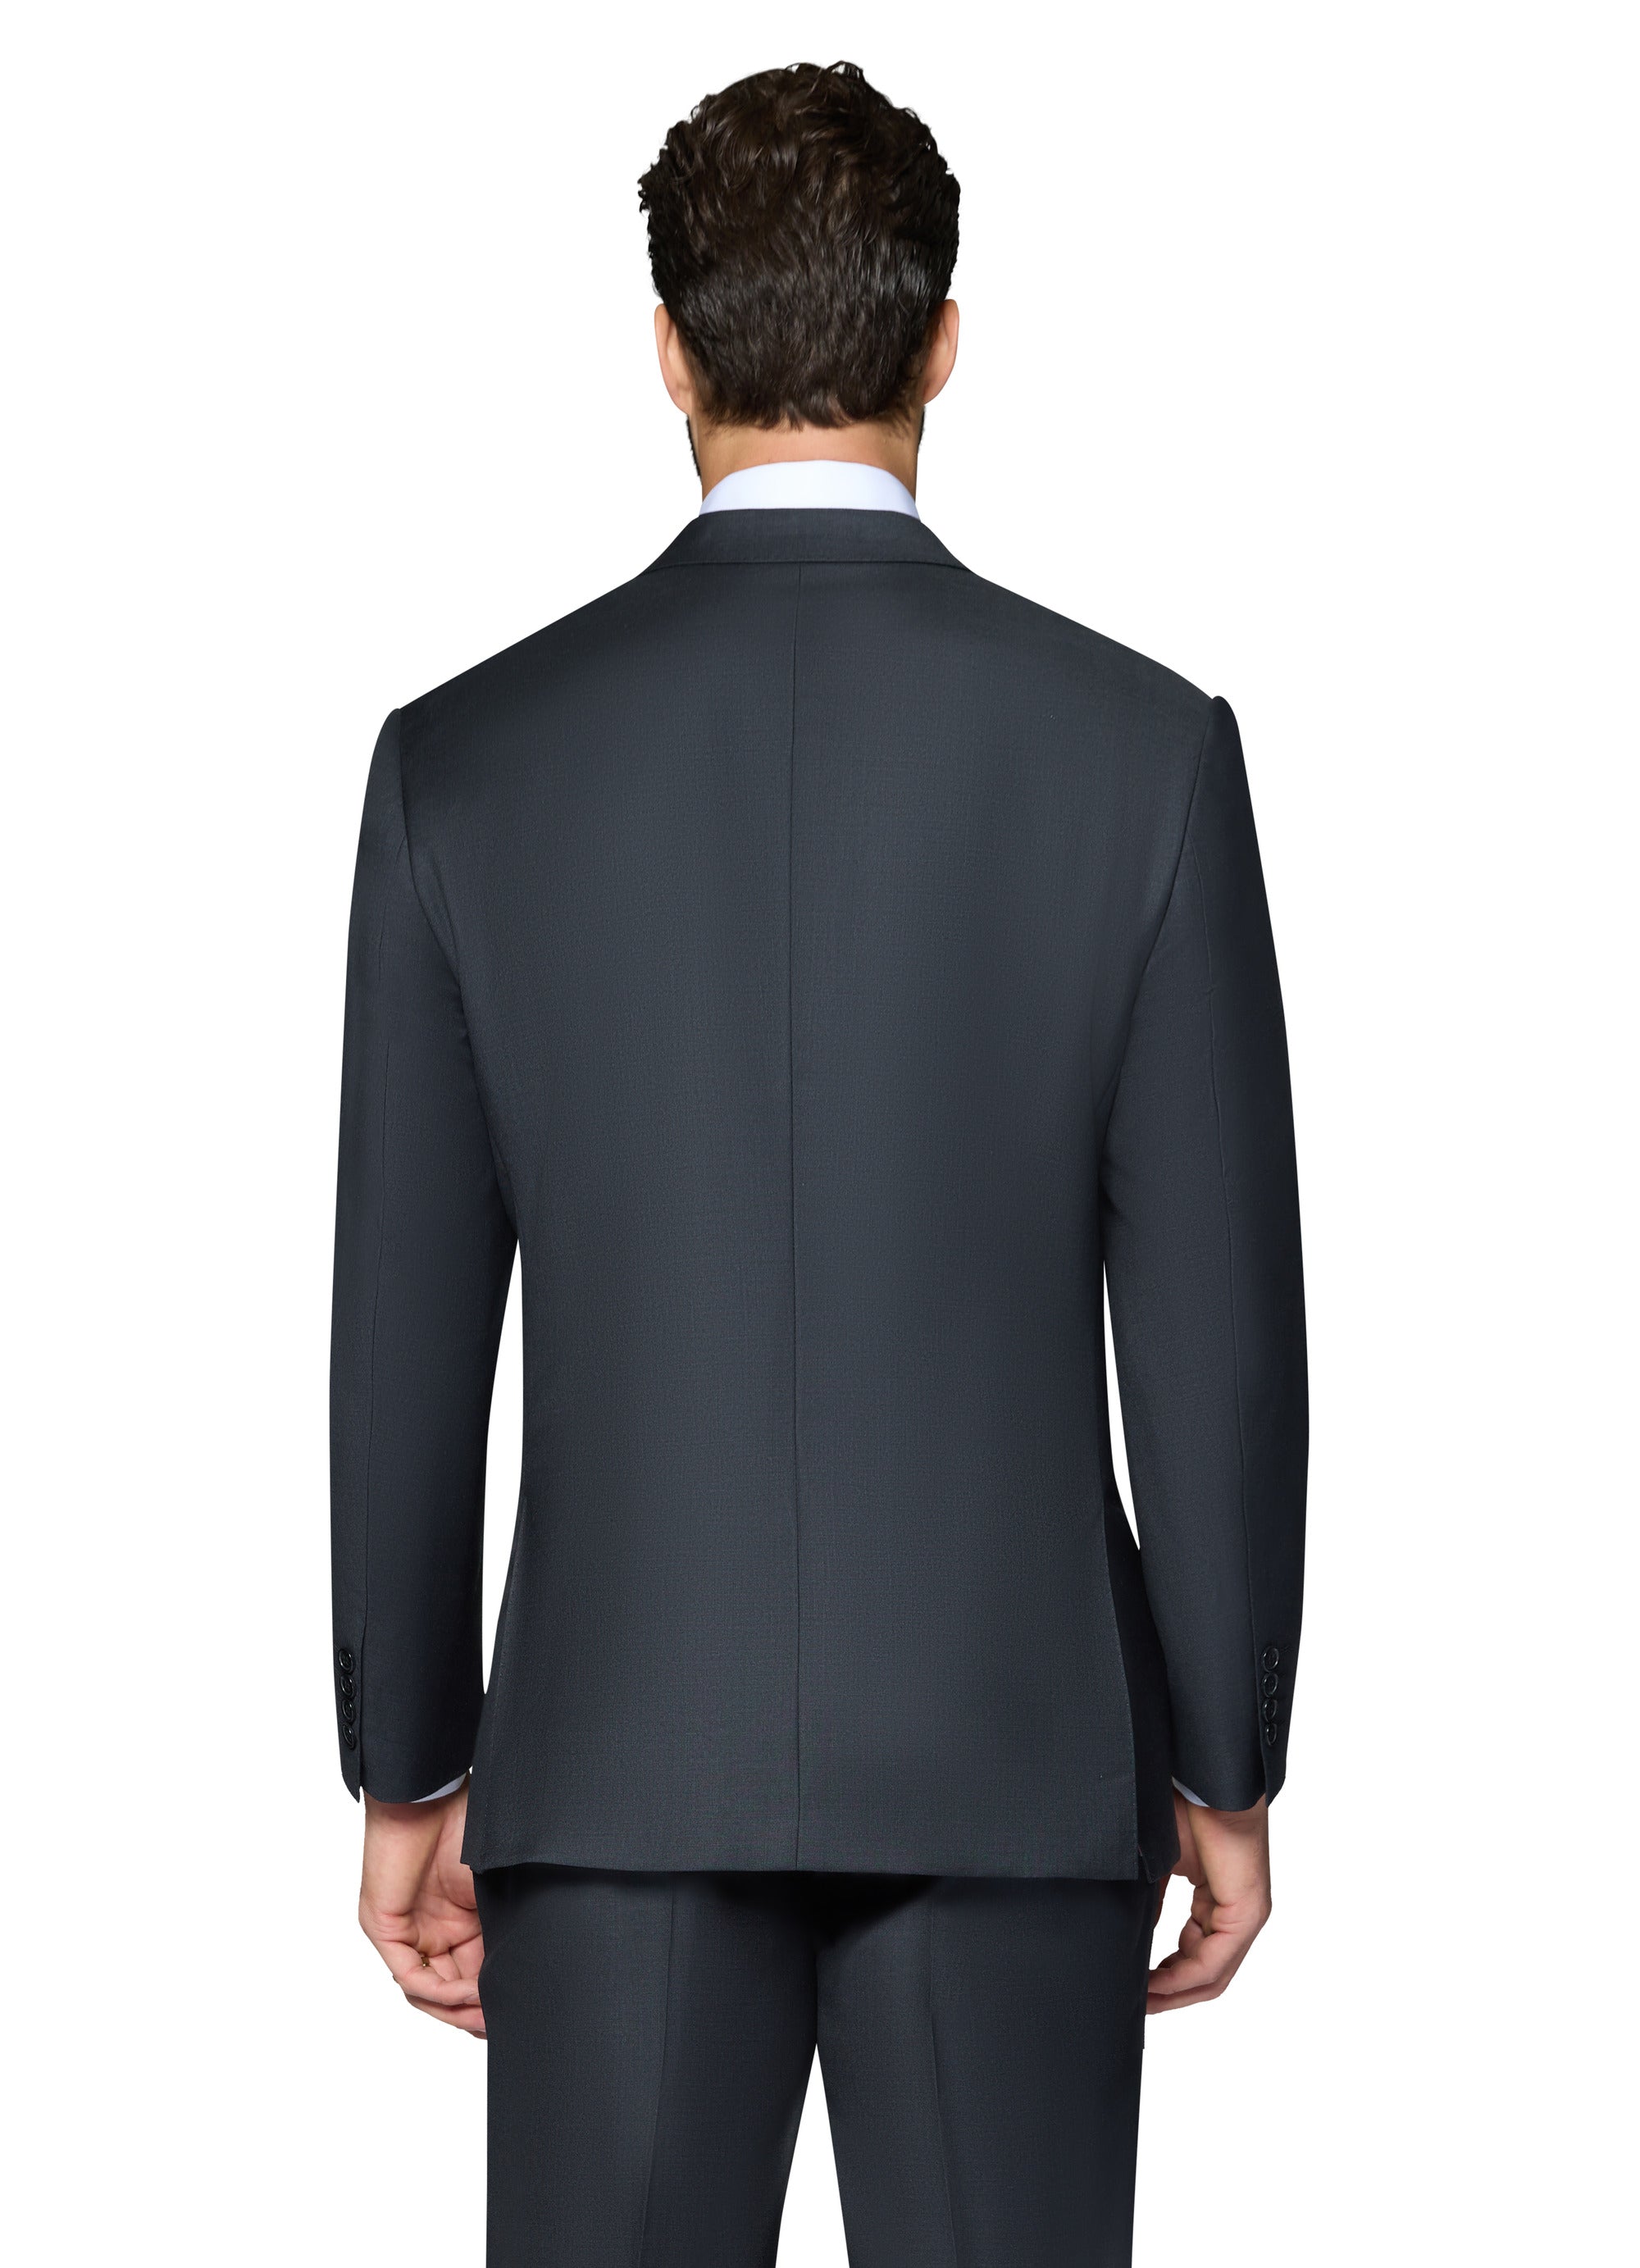 Berragamo Elegant Wool Suit - Charcoal